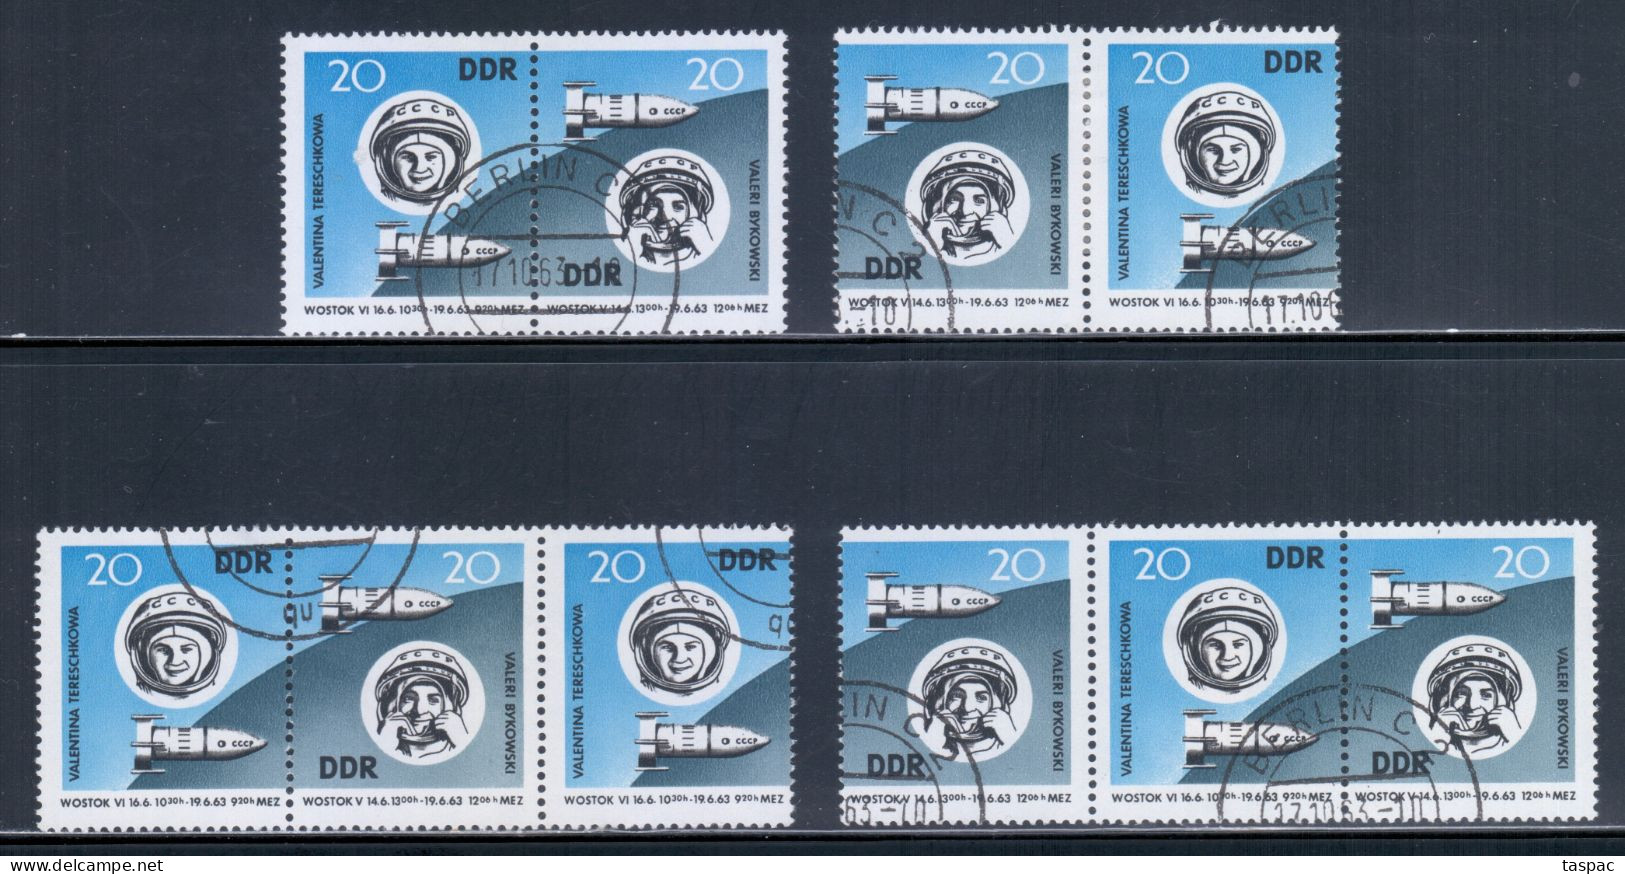 East Germany / DDR 1963 Mi# 970-971 Used - W Zd 90-93 (4 Zd) - Space Flights Of Valeri Bykovski And Valentina Tereshkova - Europe